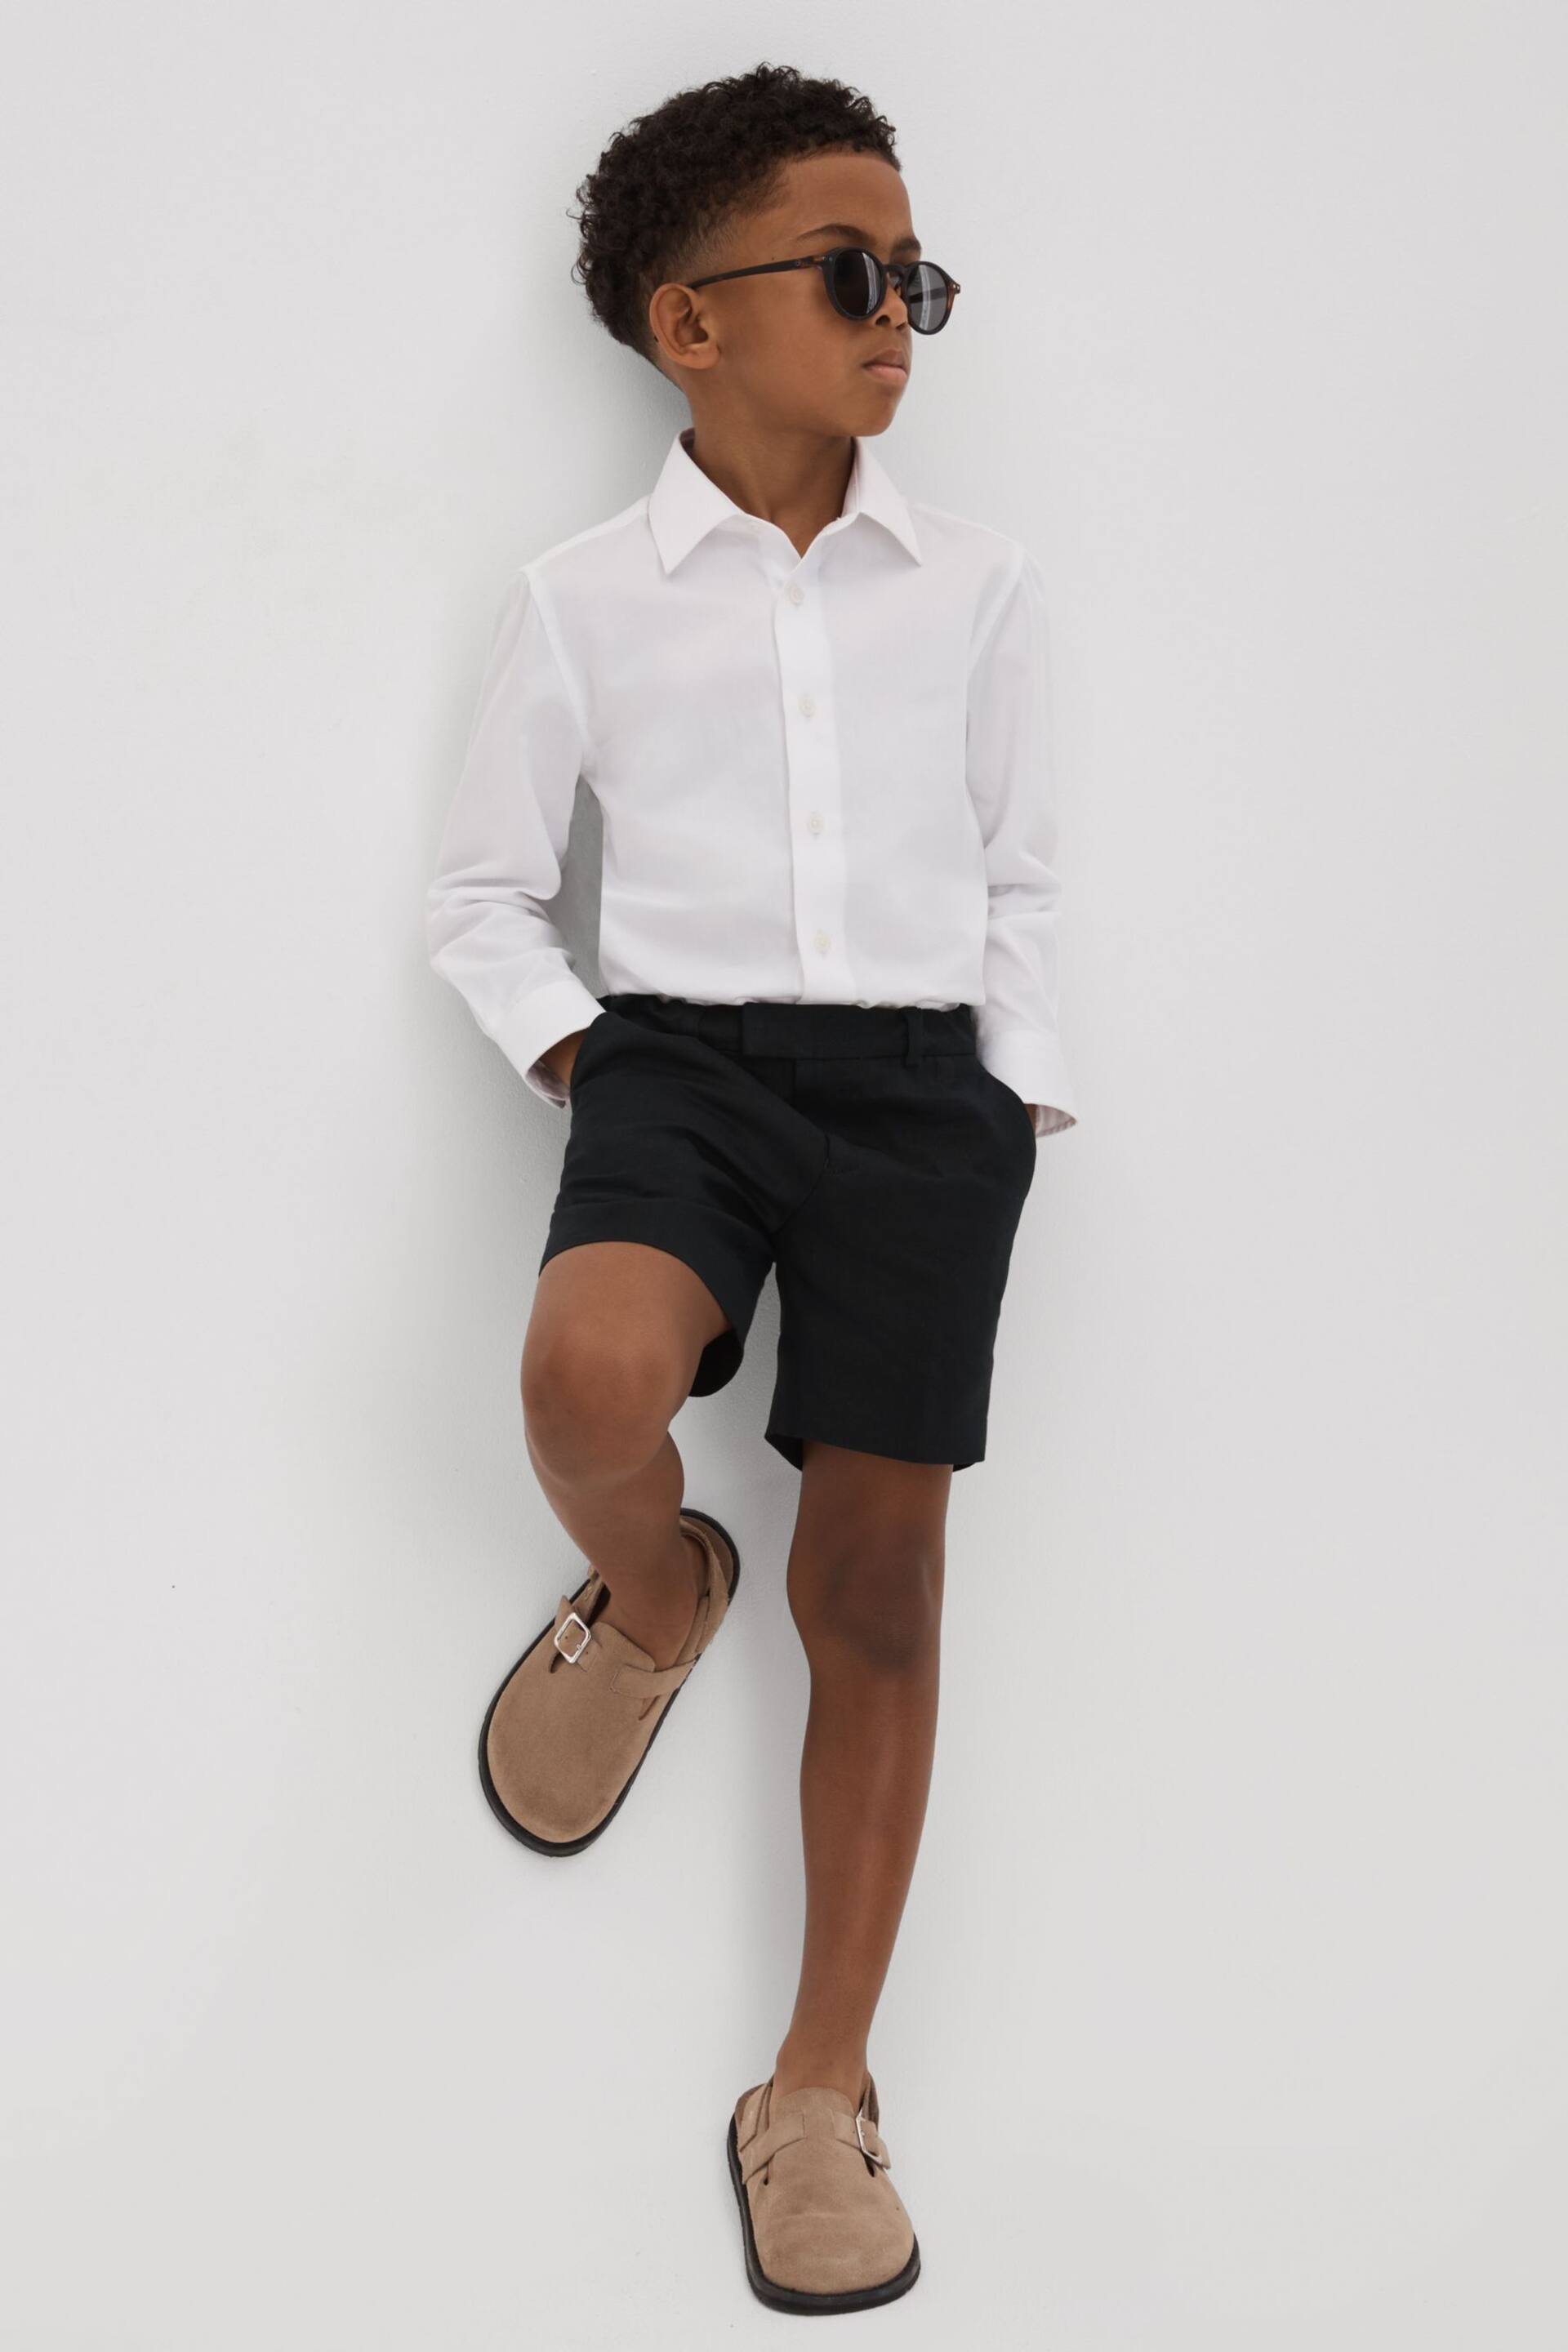 Reiss Navy Kin Junior Slim Fit Linen Adjustable Shorts - Image 3 of 4